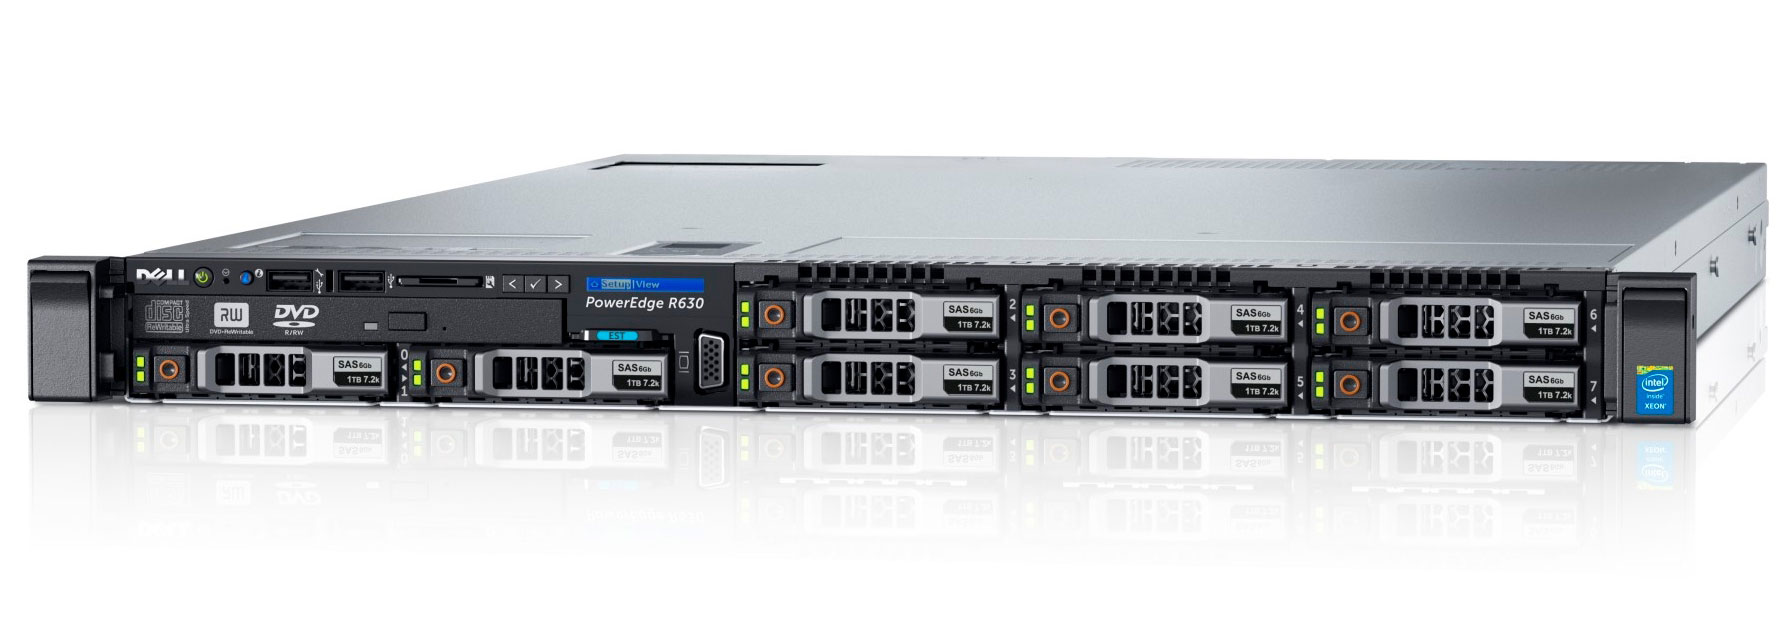 Подробное фото Сервер DELL PowerEdge R630 Xeon 2x E5-2697Av4 256Gb 2133P DDR4 8x noHDD 2.5", SAS RAID Perc H730 mini, 1024Mb, DVD, 2*PSU